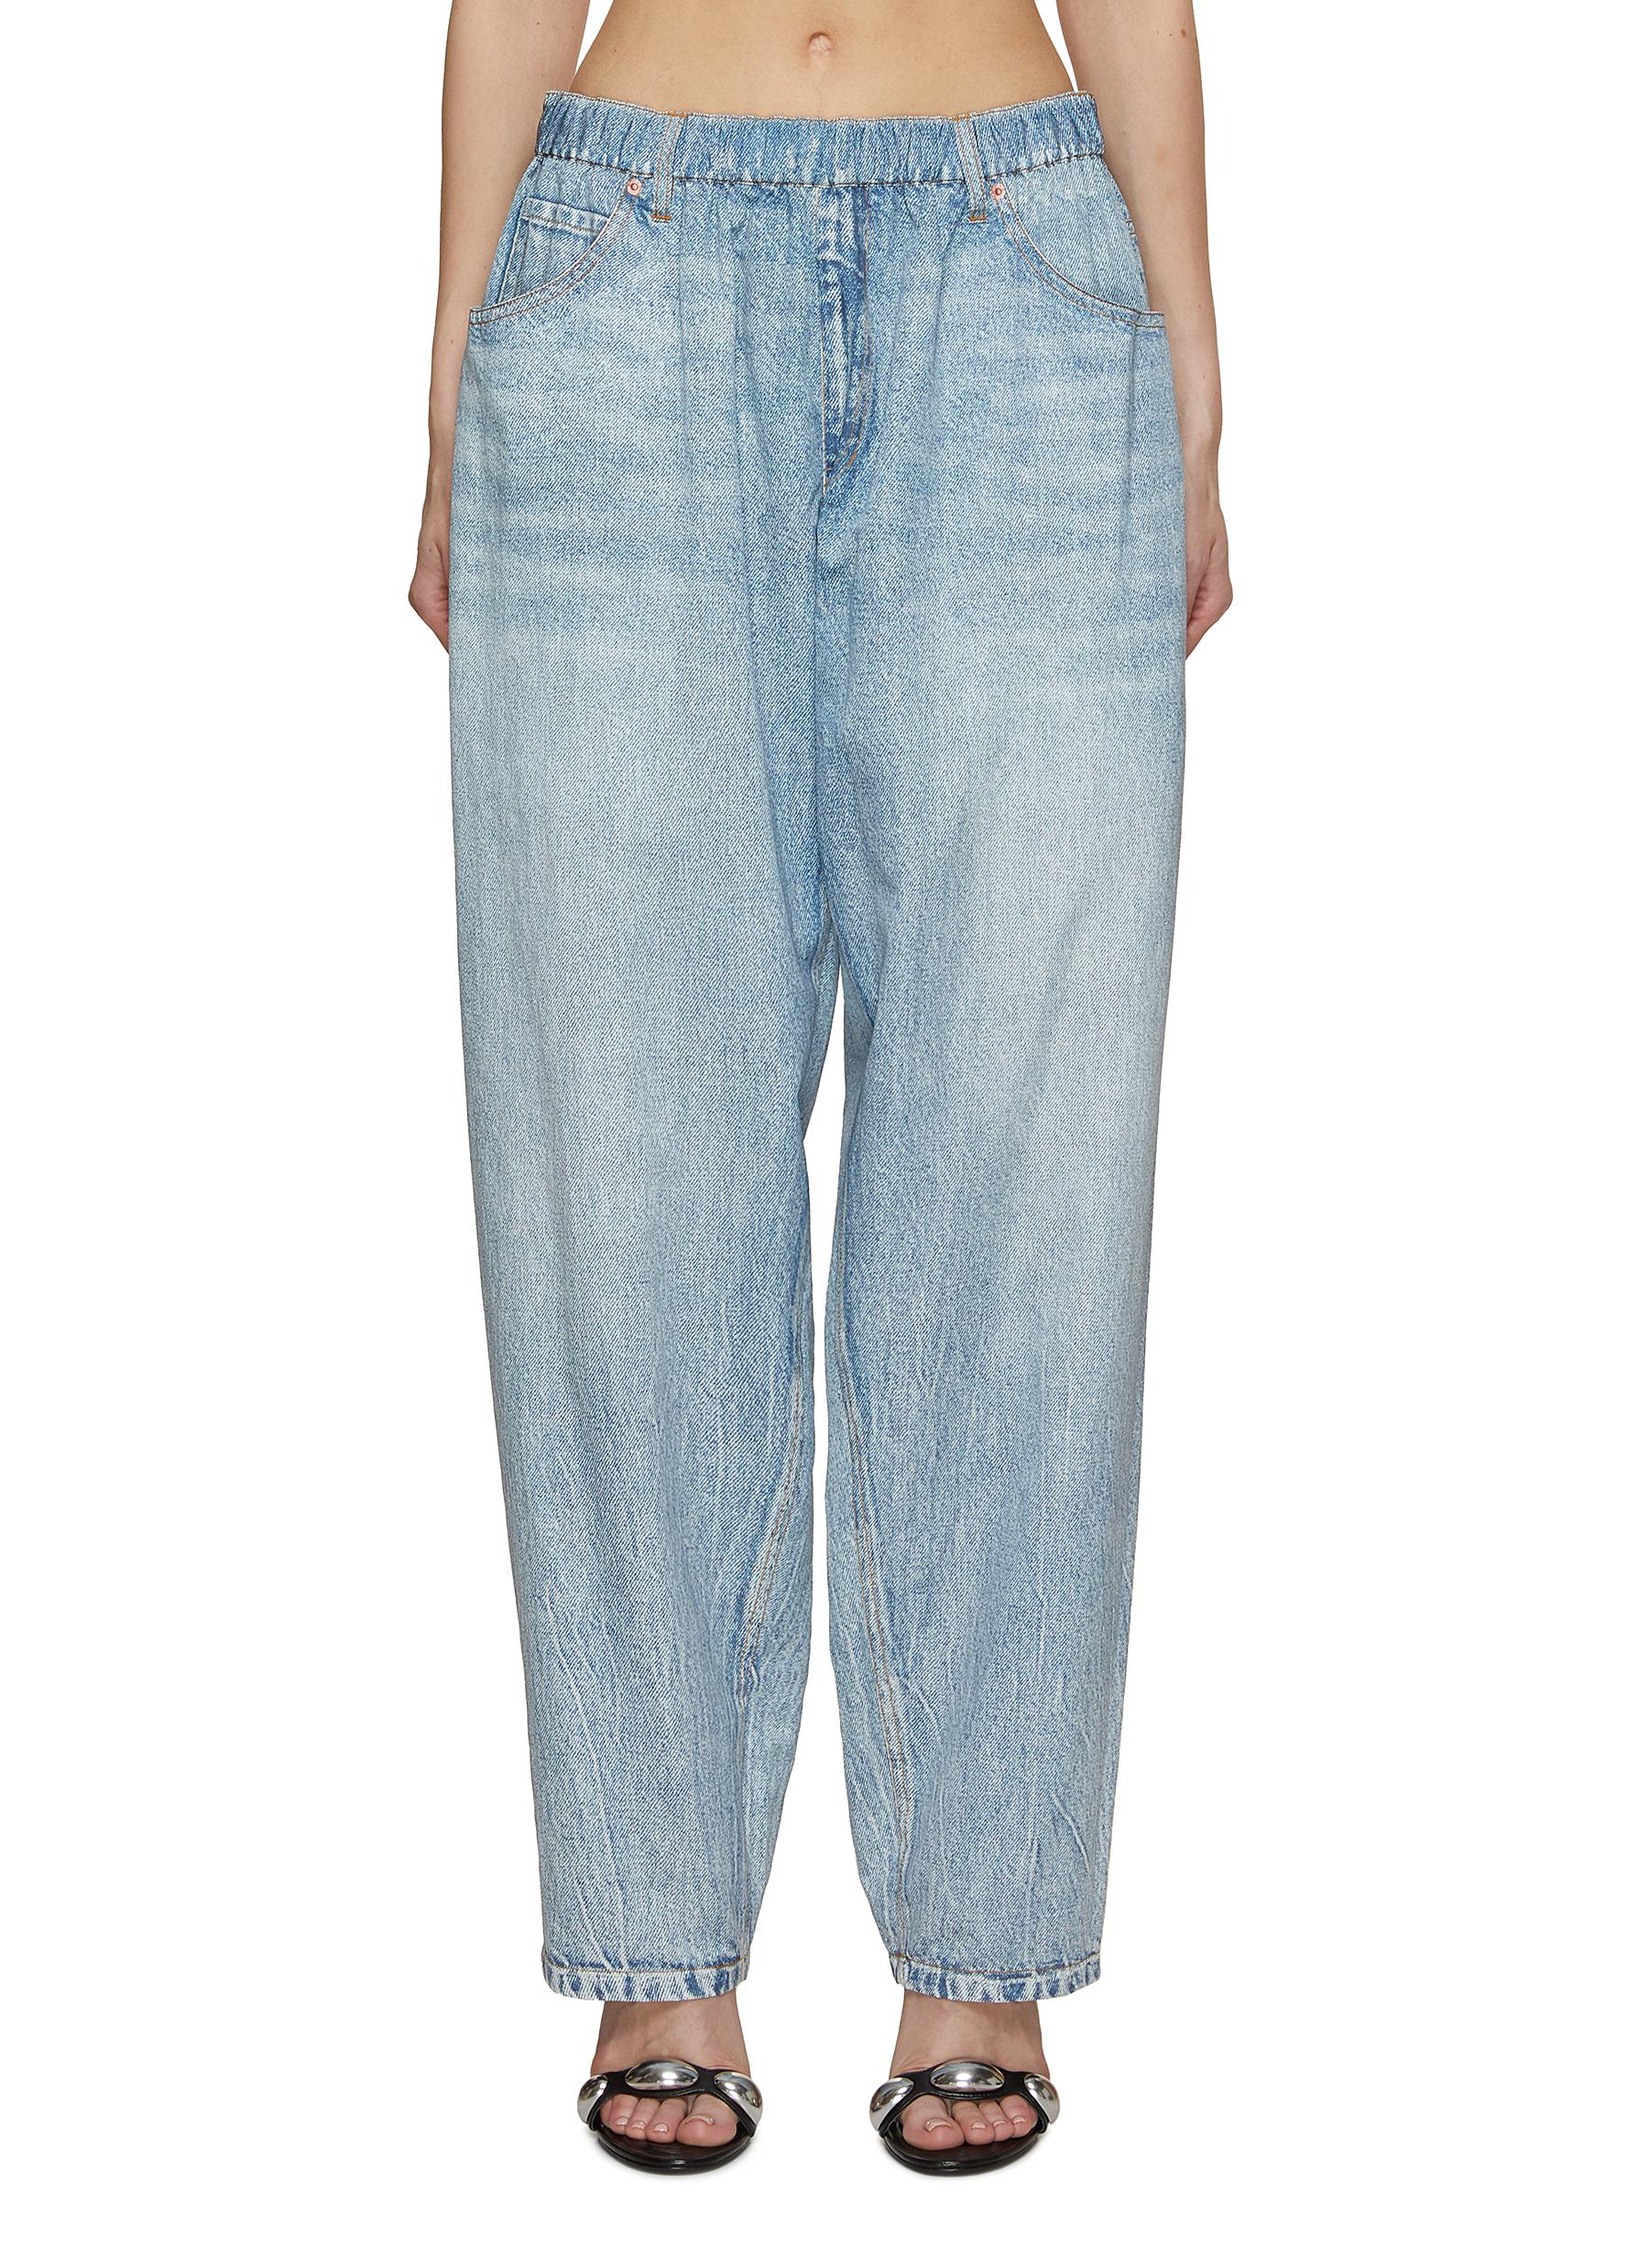 Denim X Alexander Wang 001 Skinny Jeans In Light Indigo Fade Blue Size 25 |  eBay